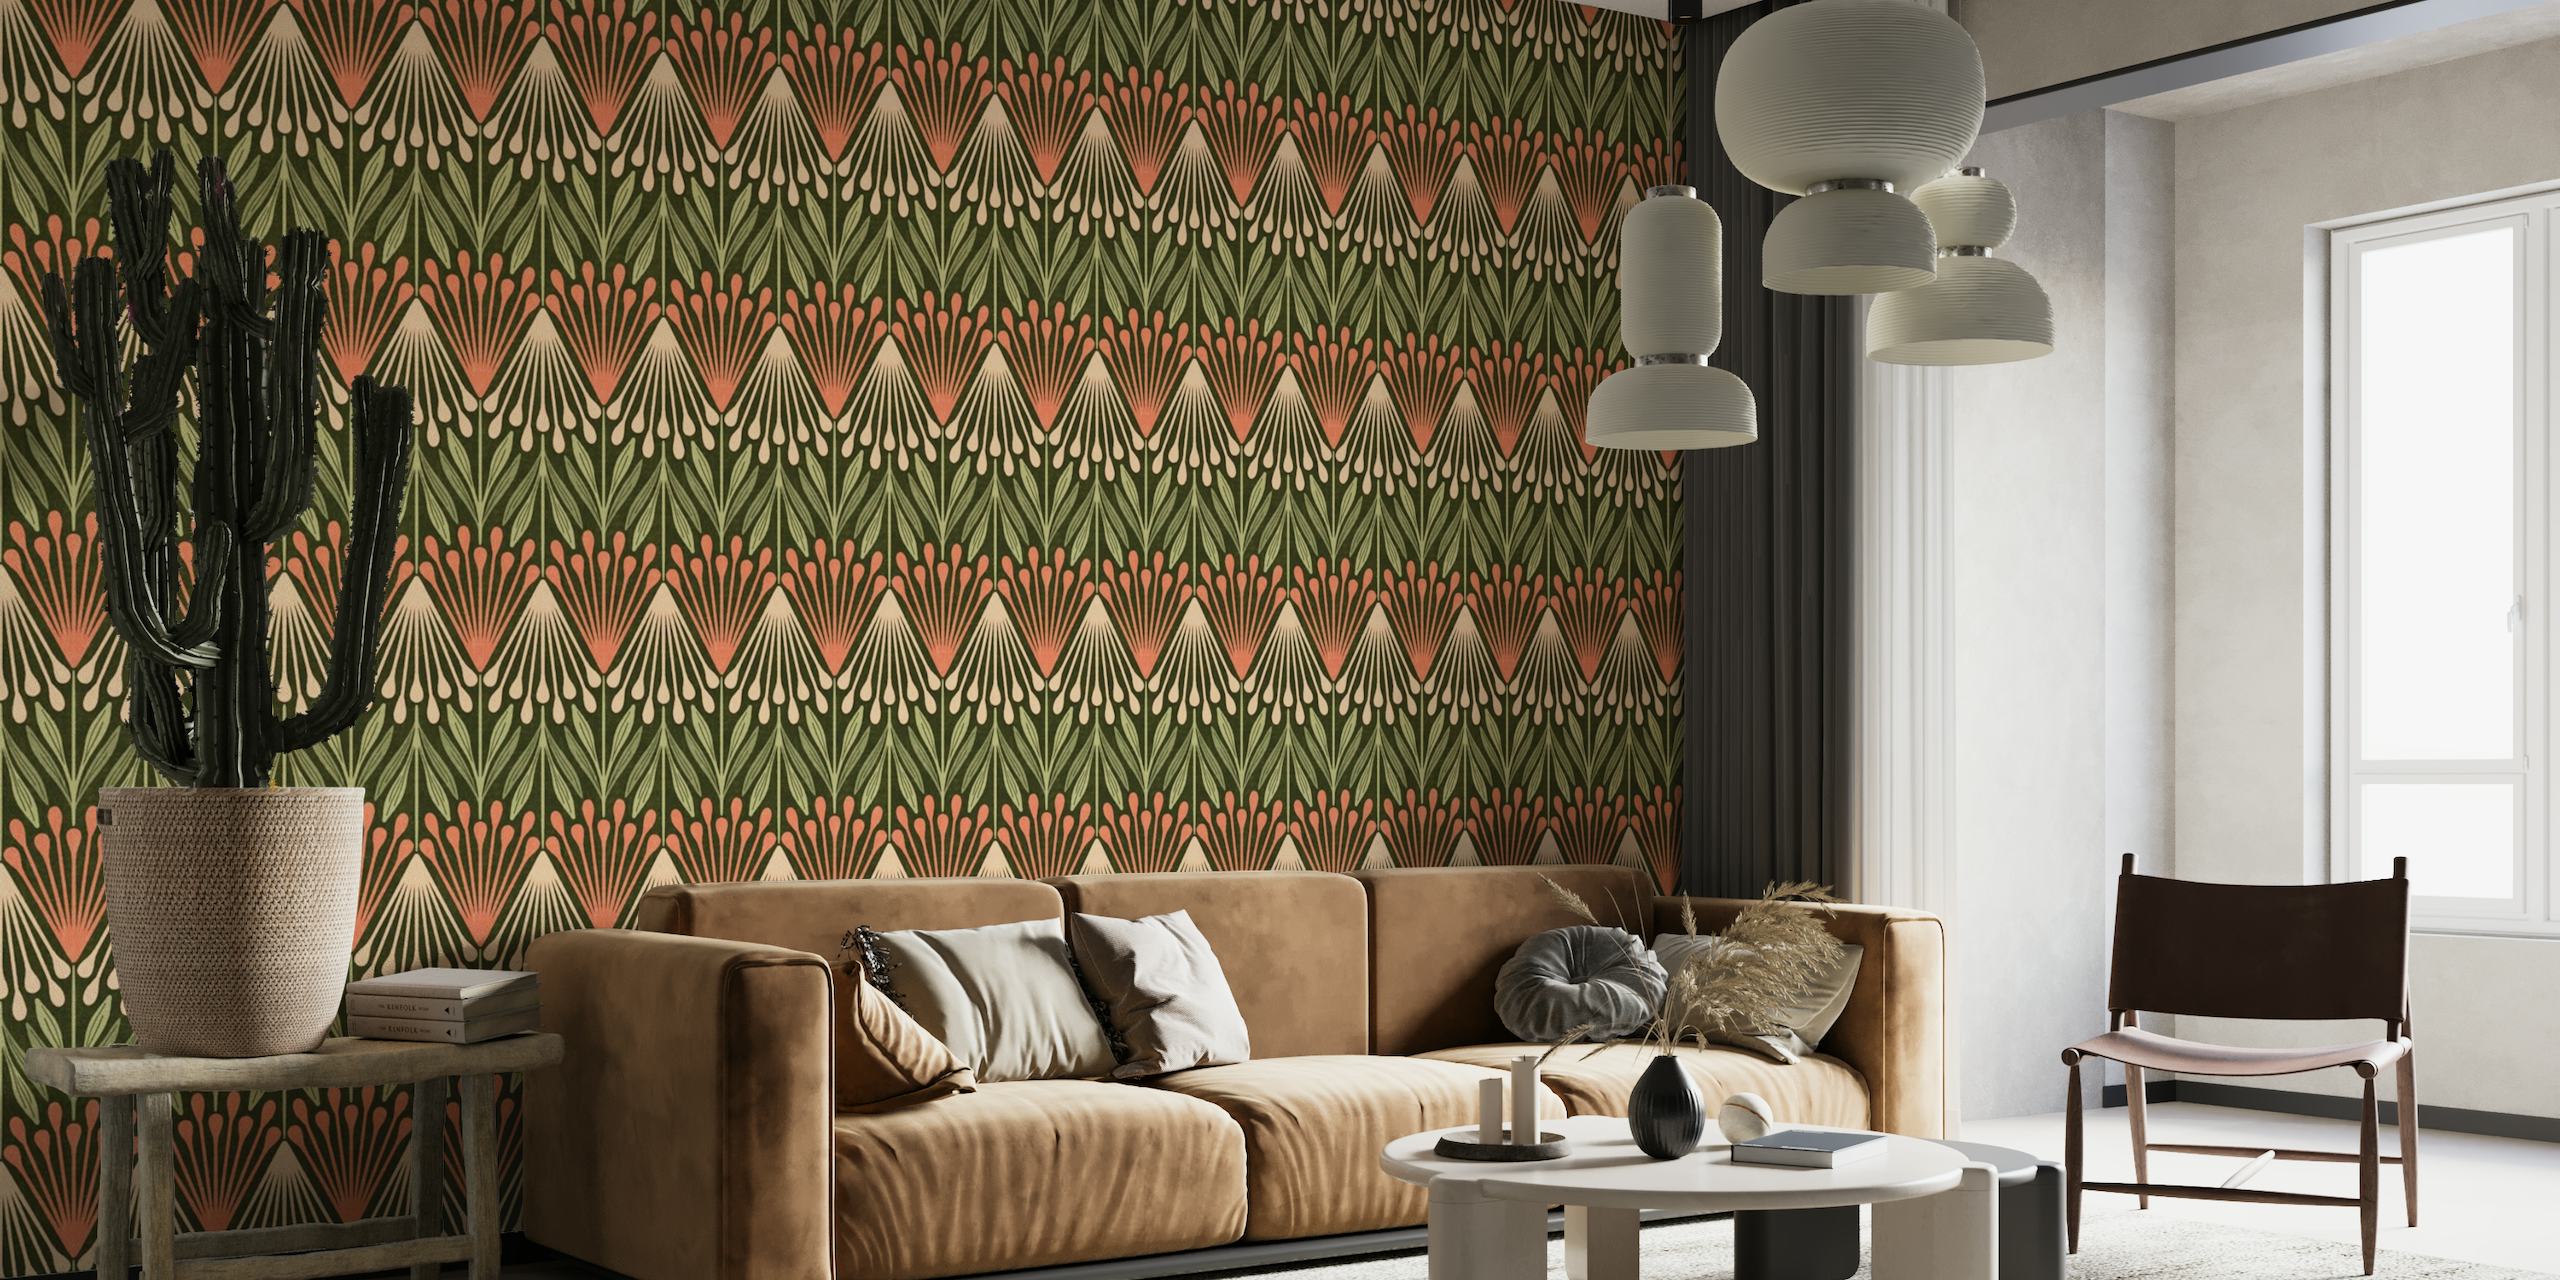 Zidna slika stilizirane boje breskve i zelenog botaničkog uzorka